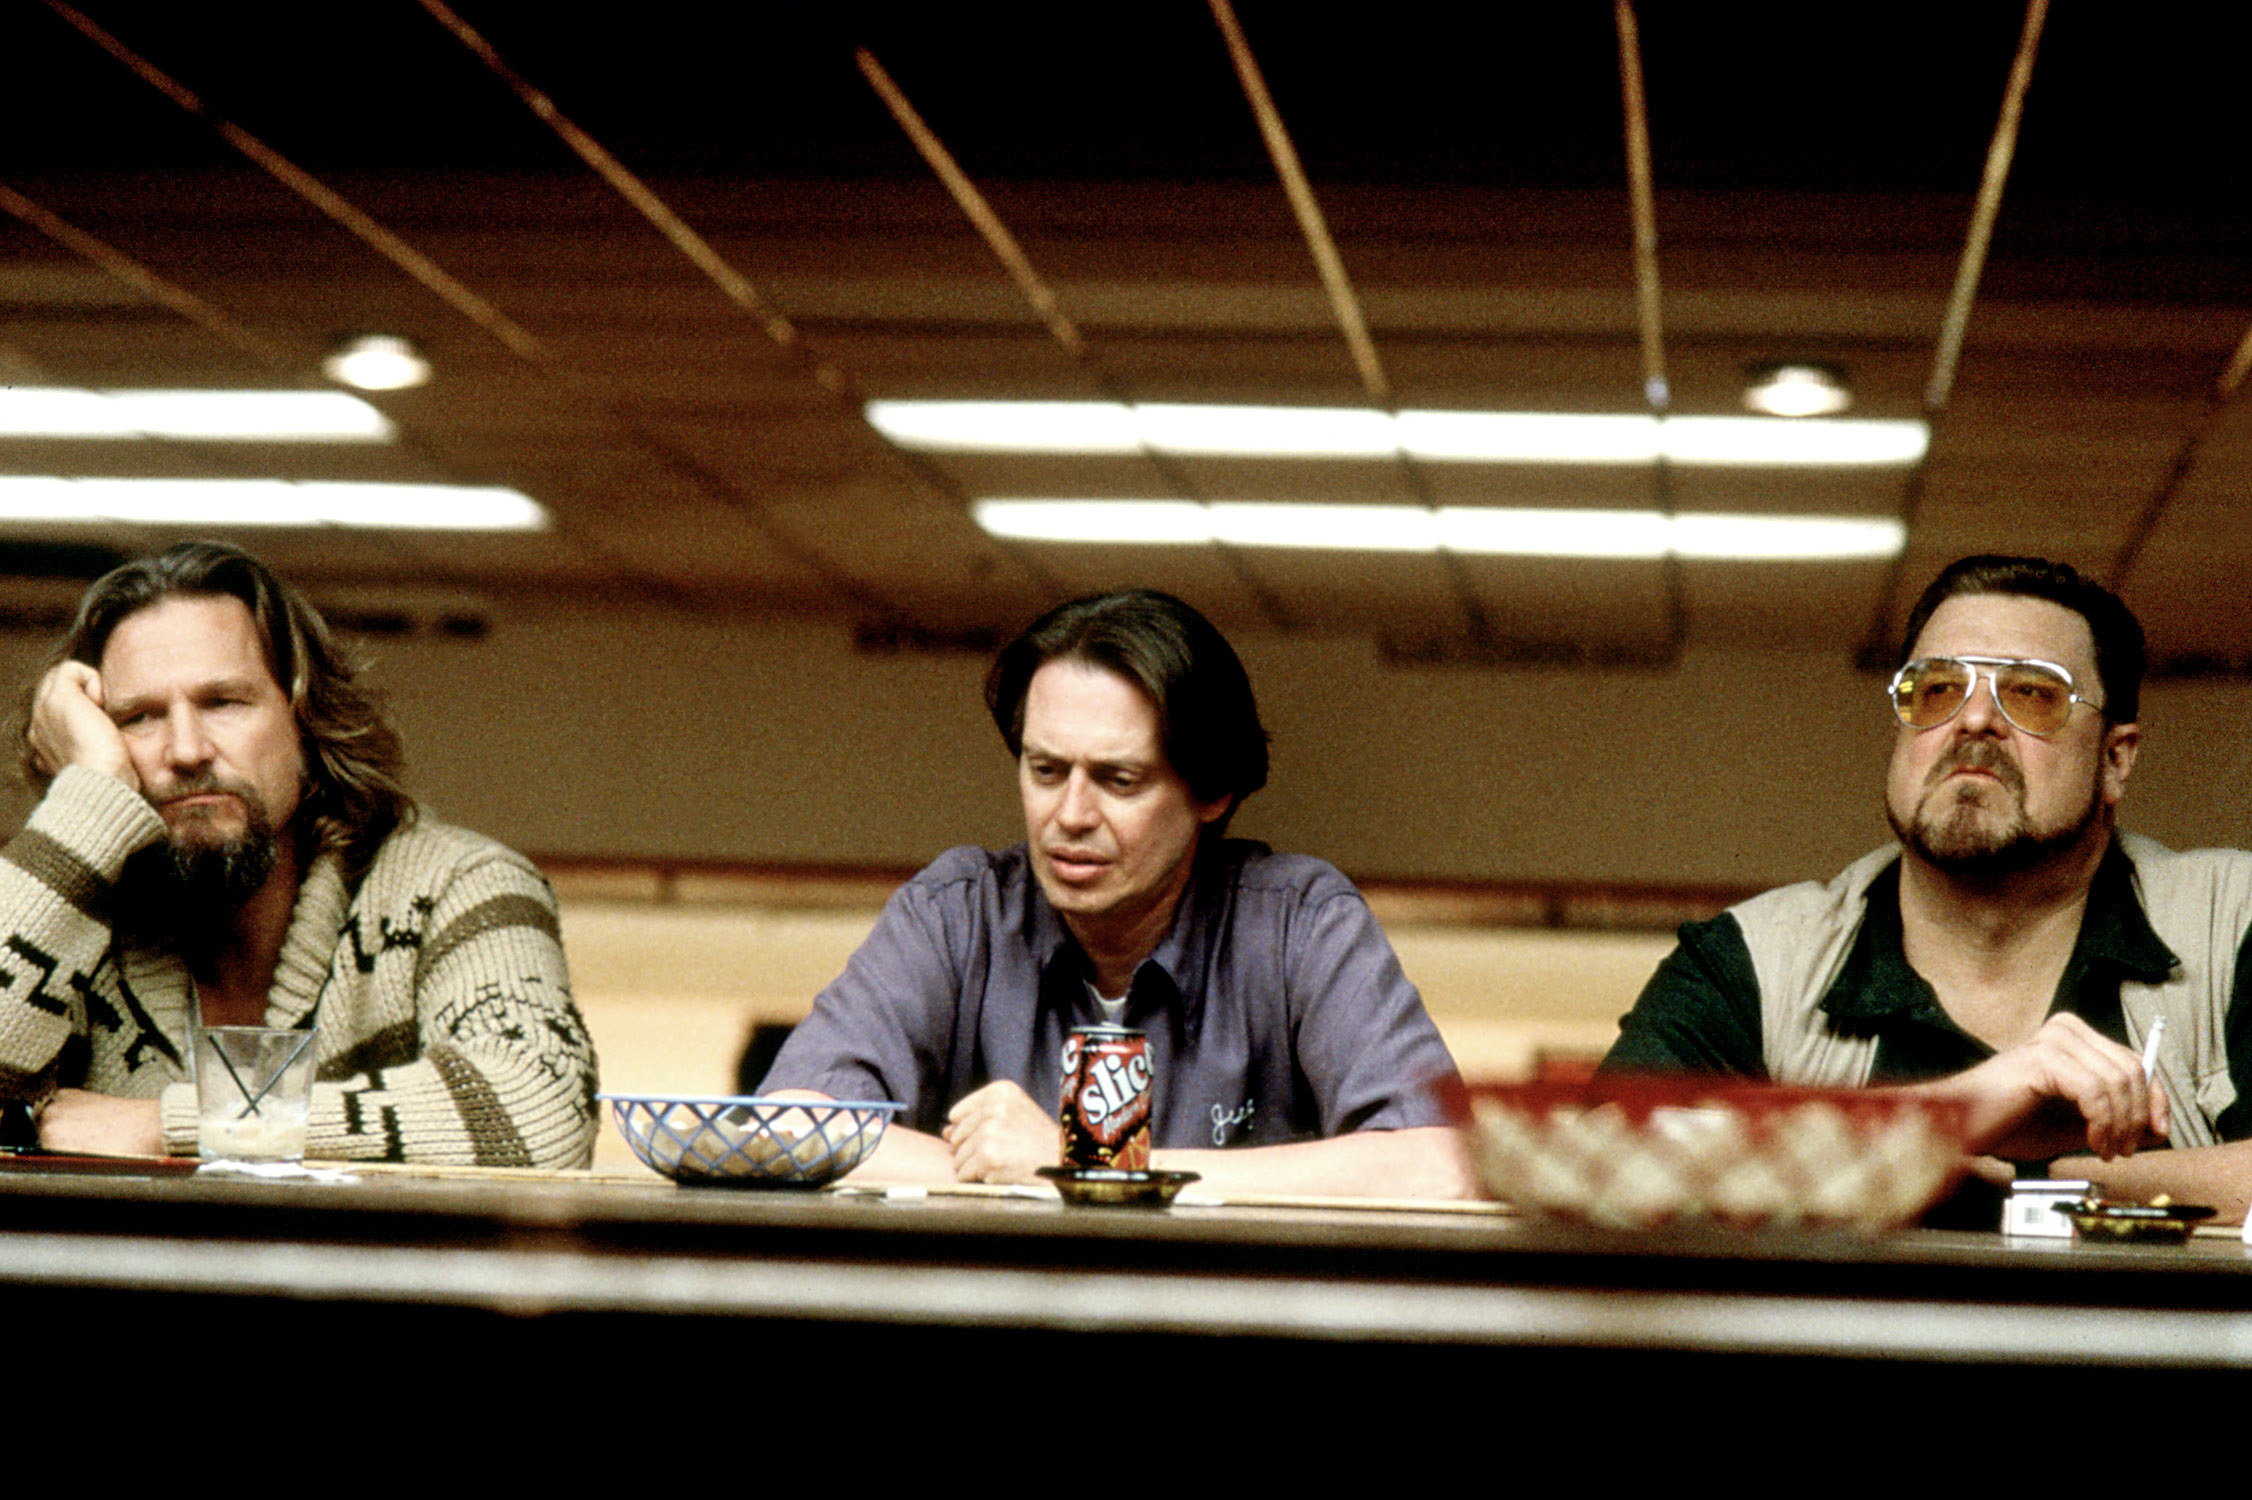 Jeff Bridges, Steve Buscemi, and John Goodman sitting at a bar